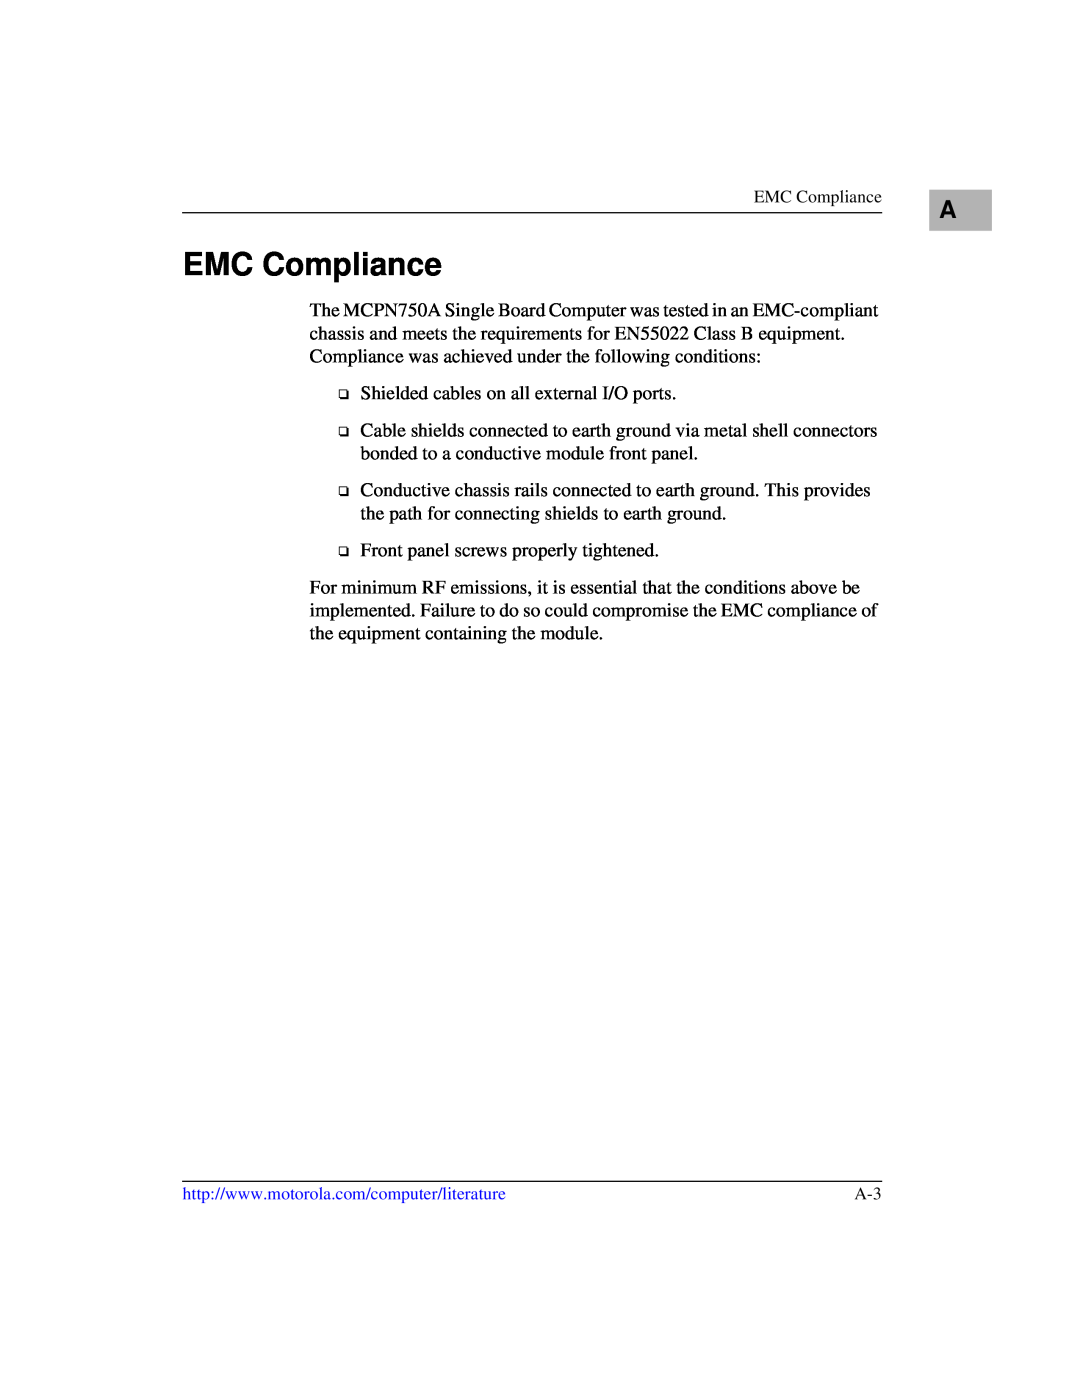 Motorola IH5, MCPN750A manual EMC Compliance 